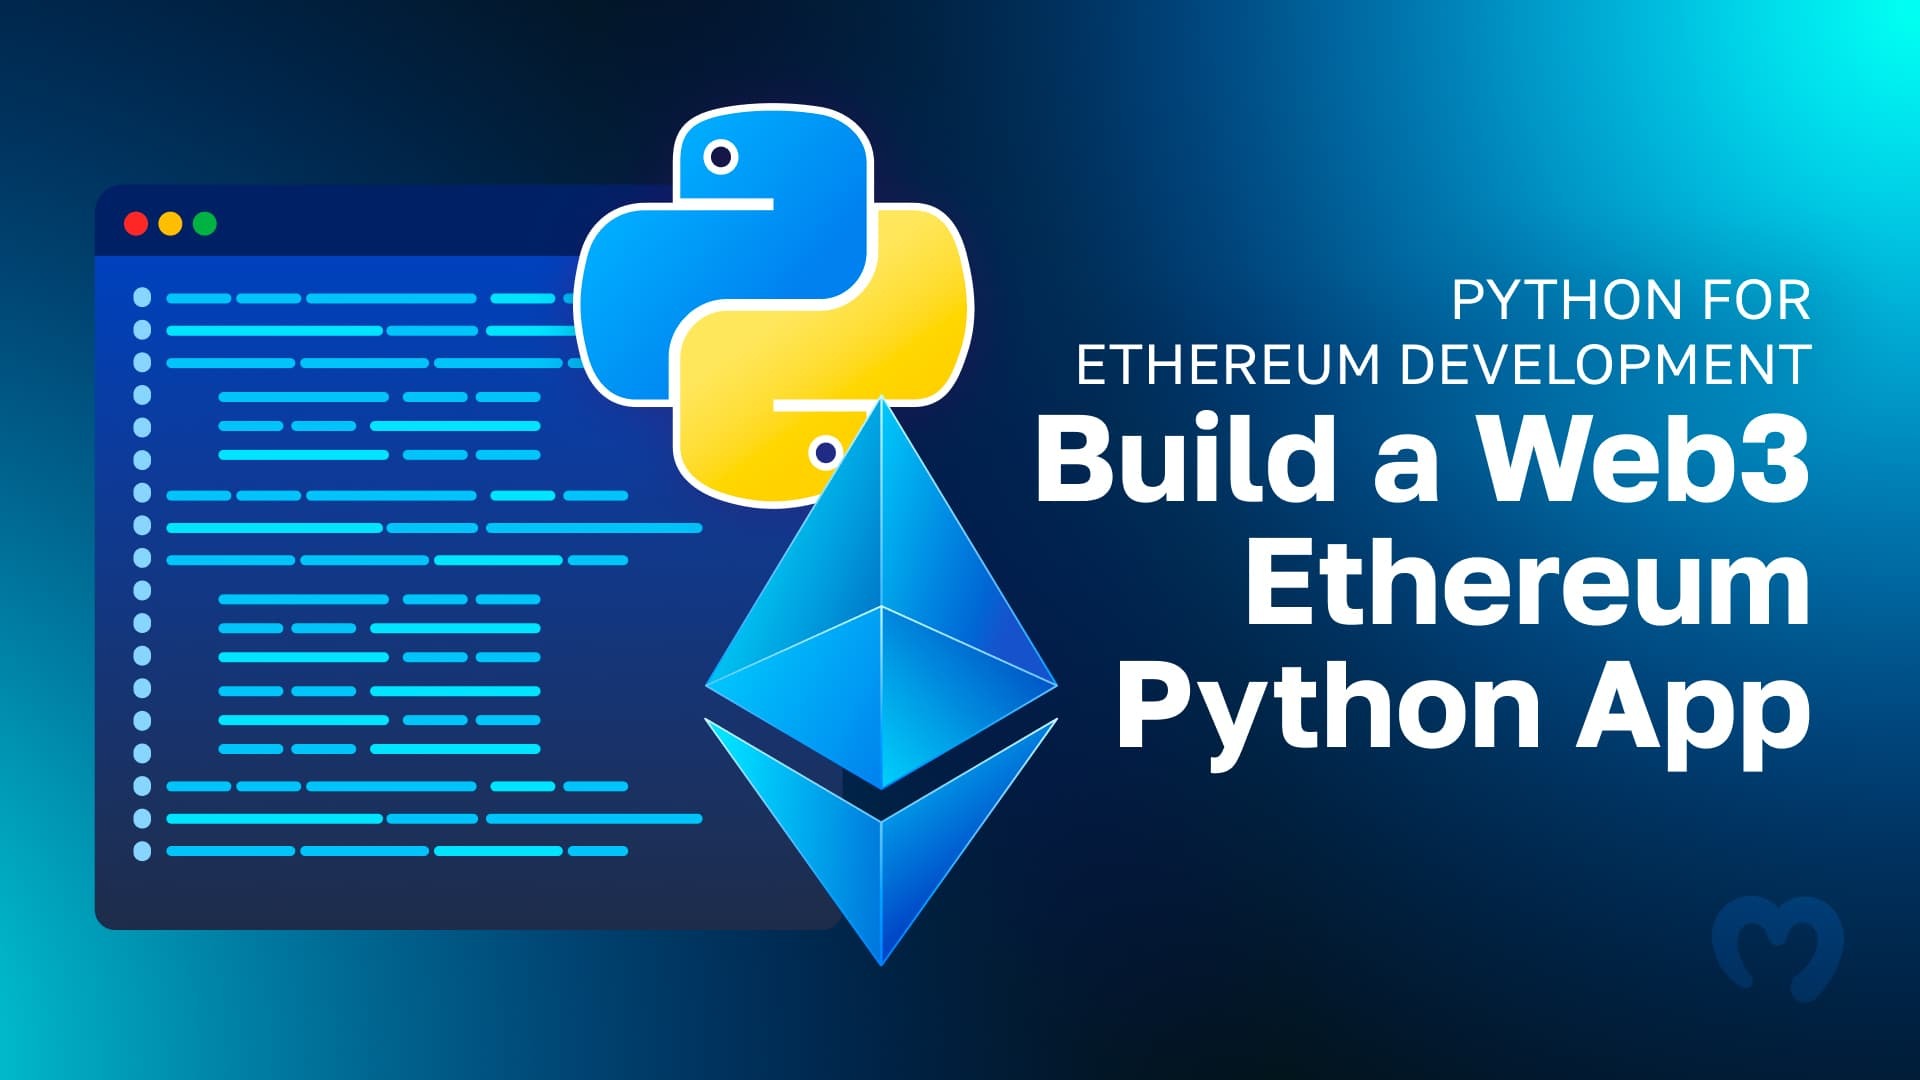 Python for Ethereum Development - Exploring how to build a Web3 Ethereum Python Application